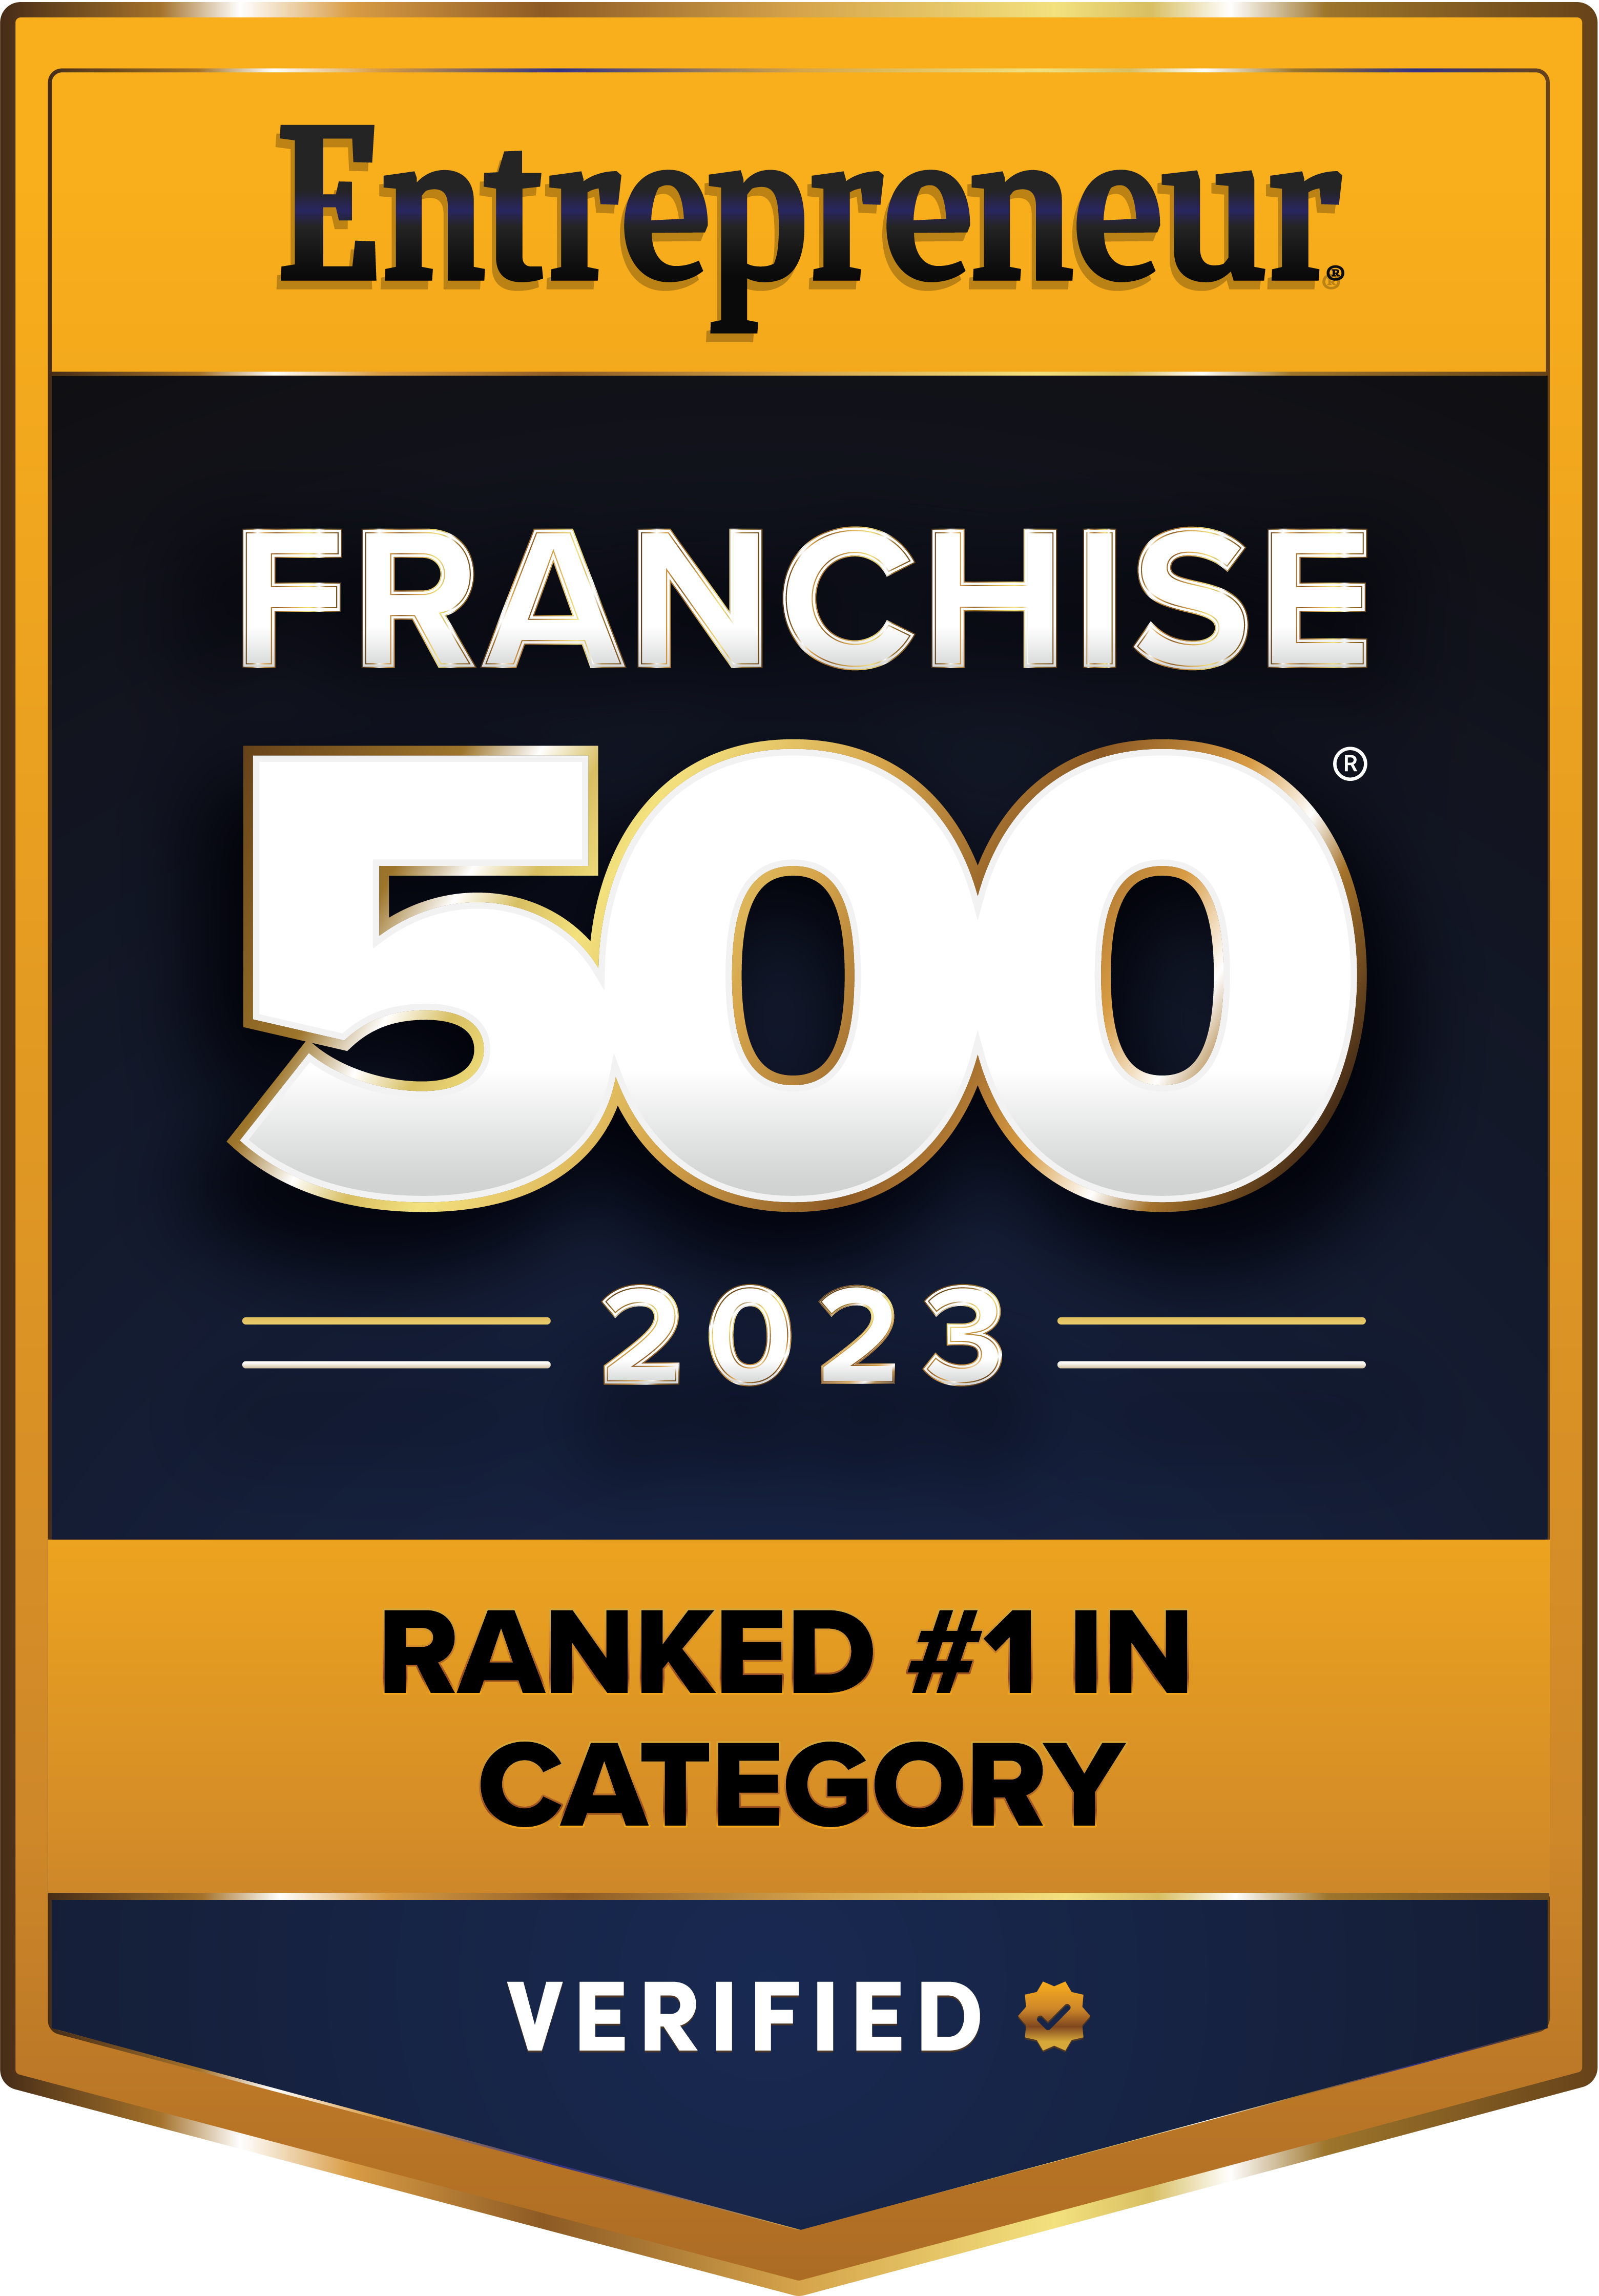 fastest growing franchise 2023 badge